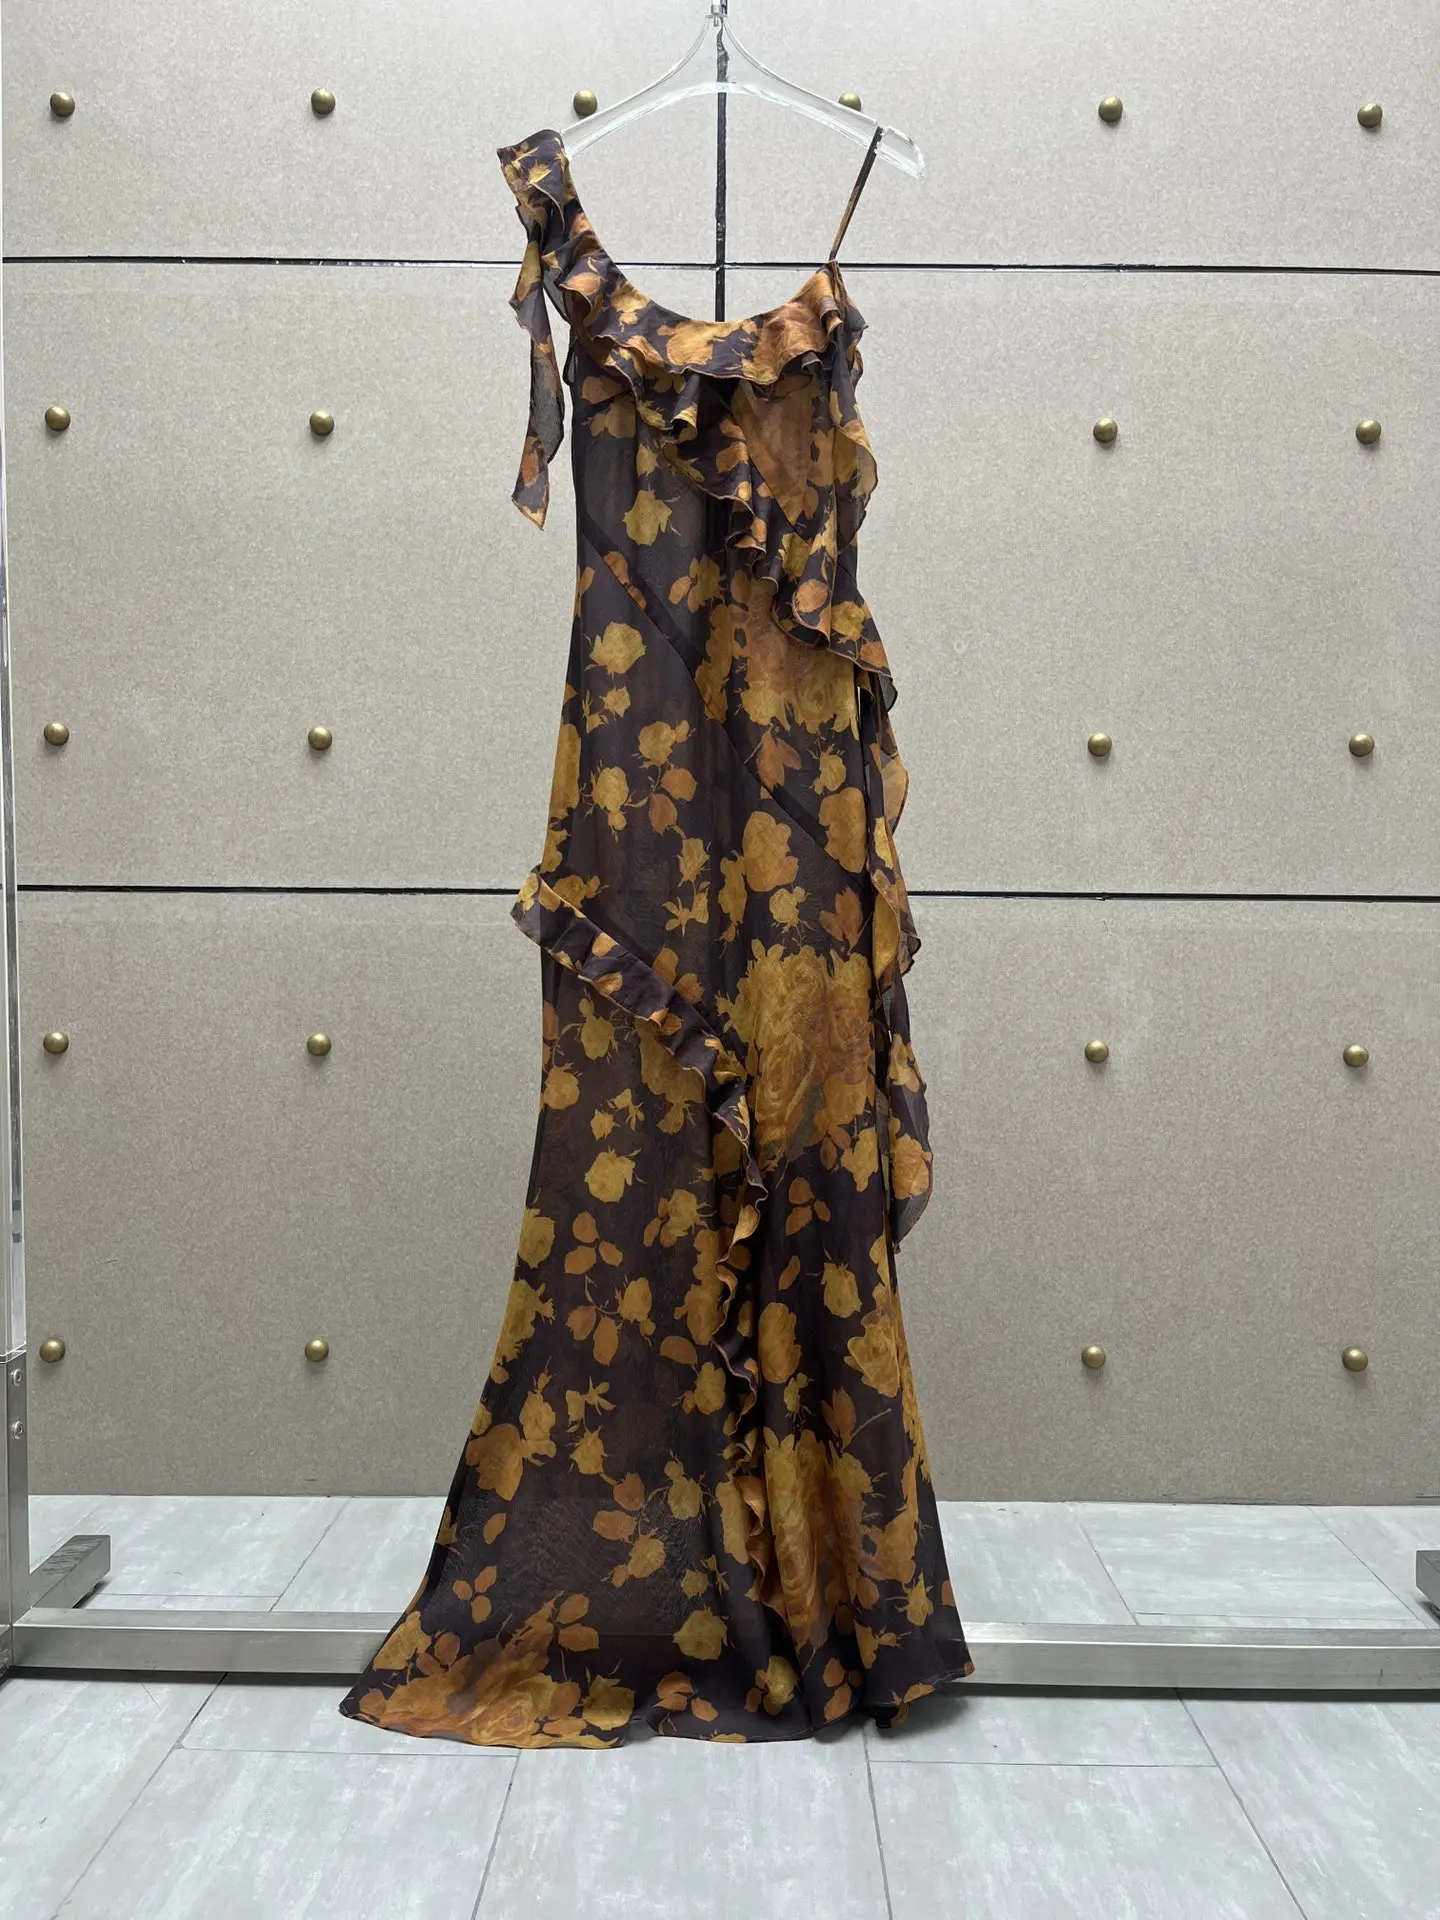 Ruffled irregular print dress, slim and tall5.24